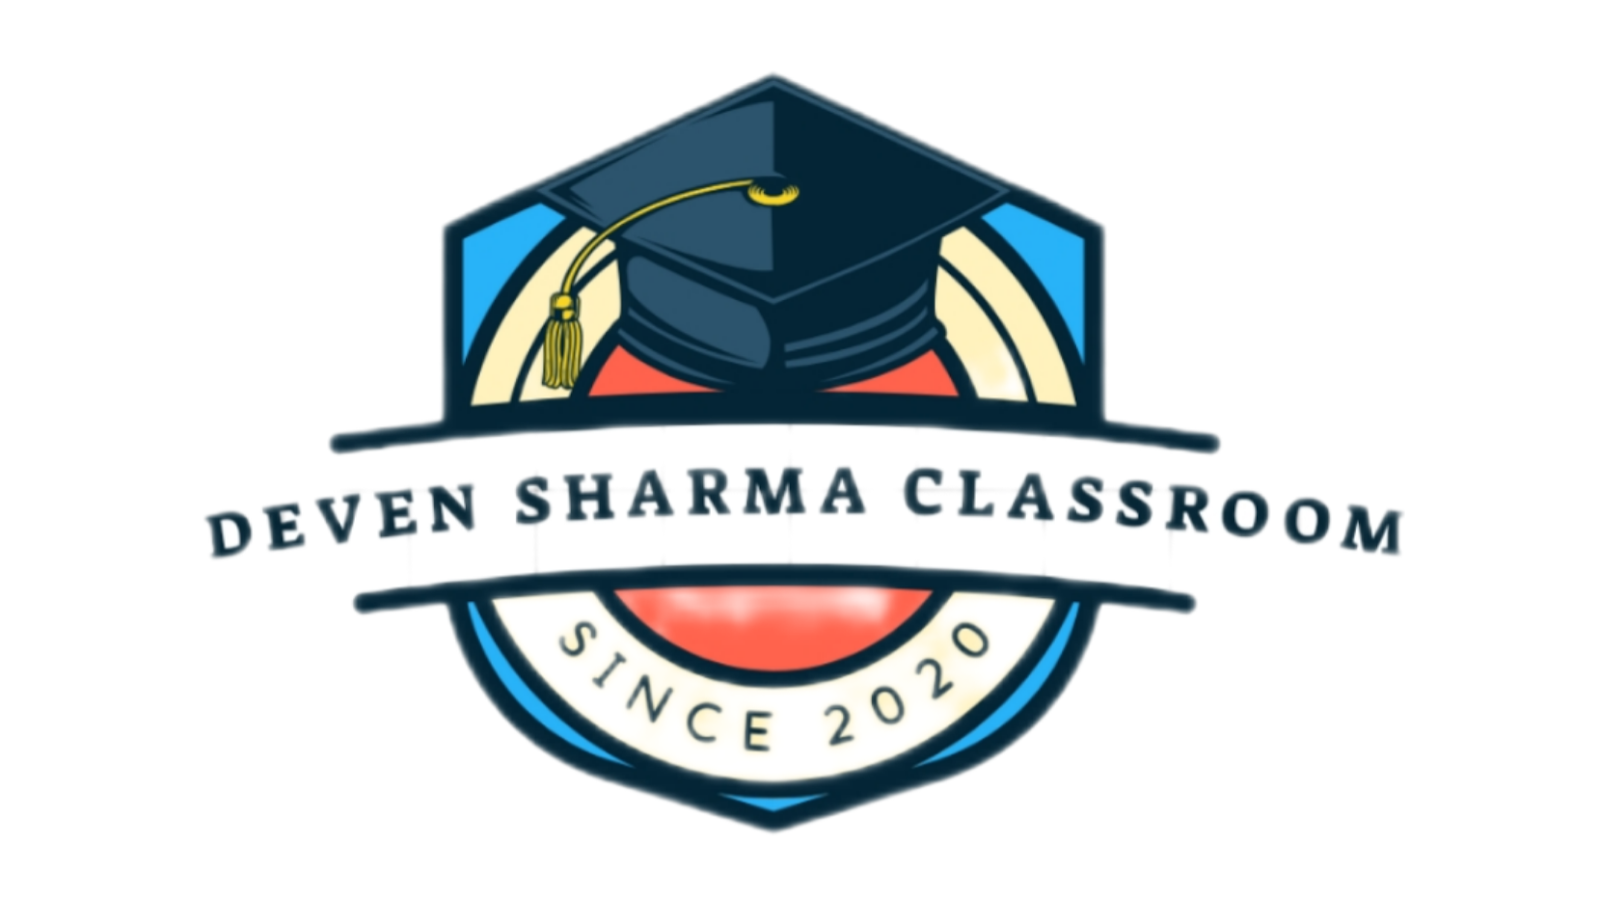 Deven Sharma Classroom 